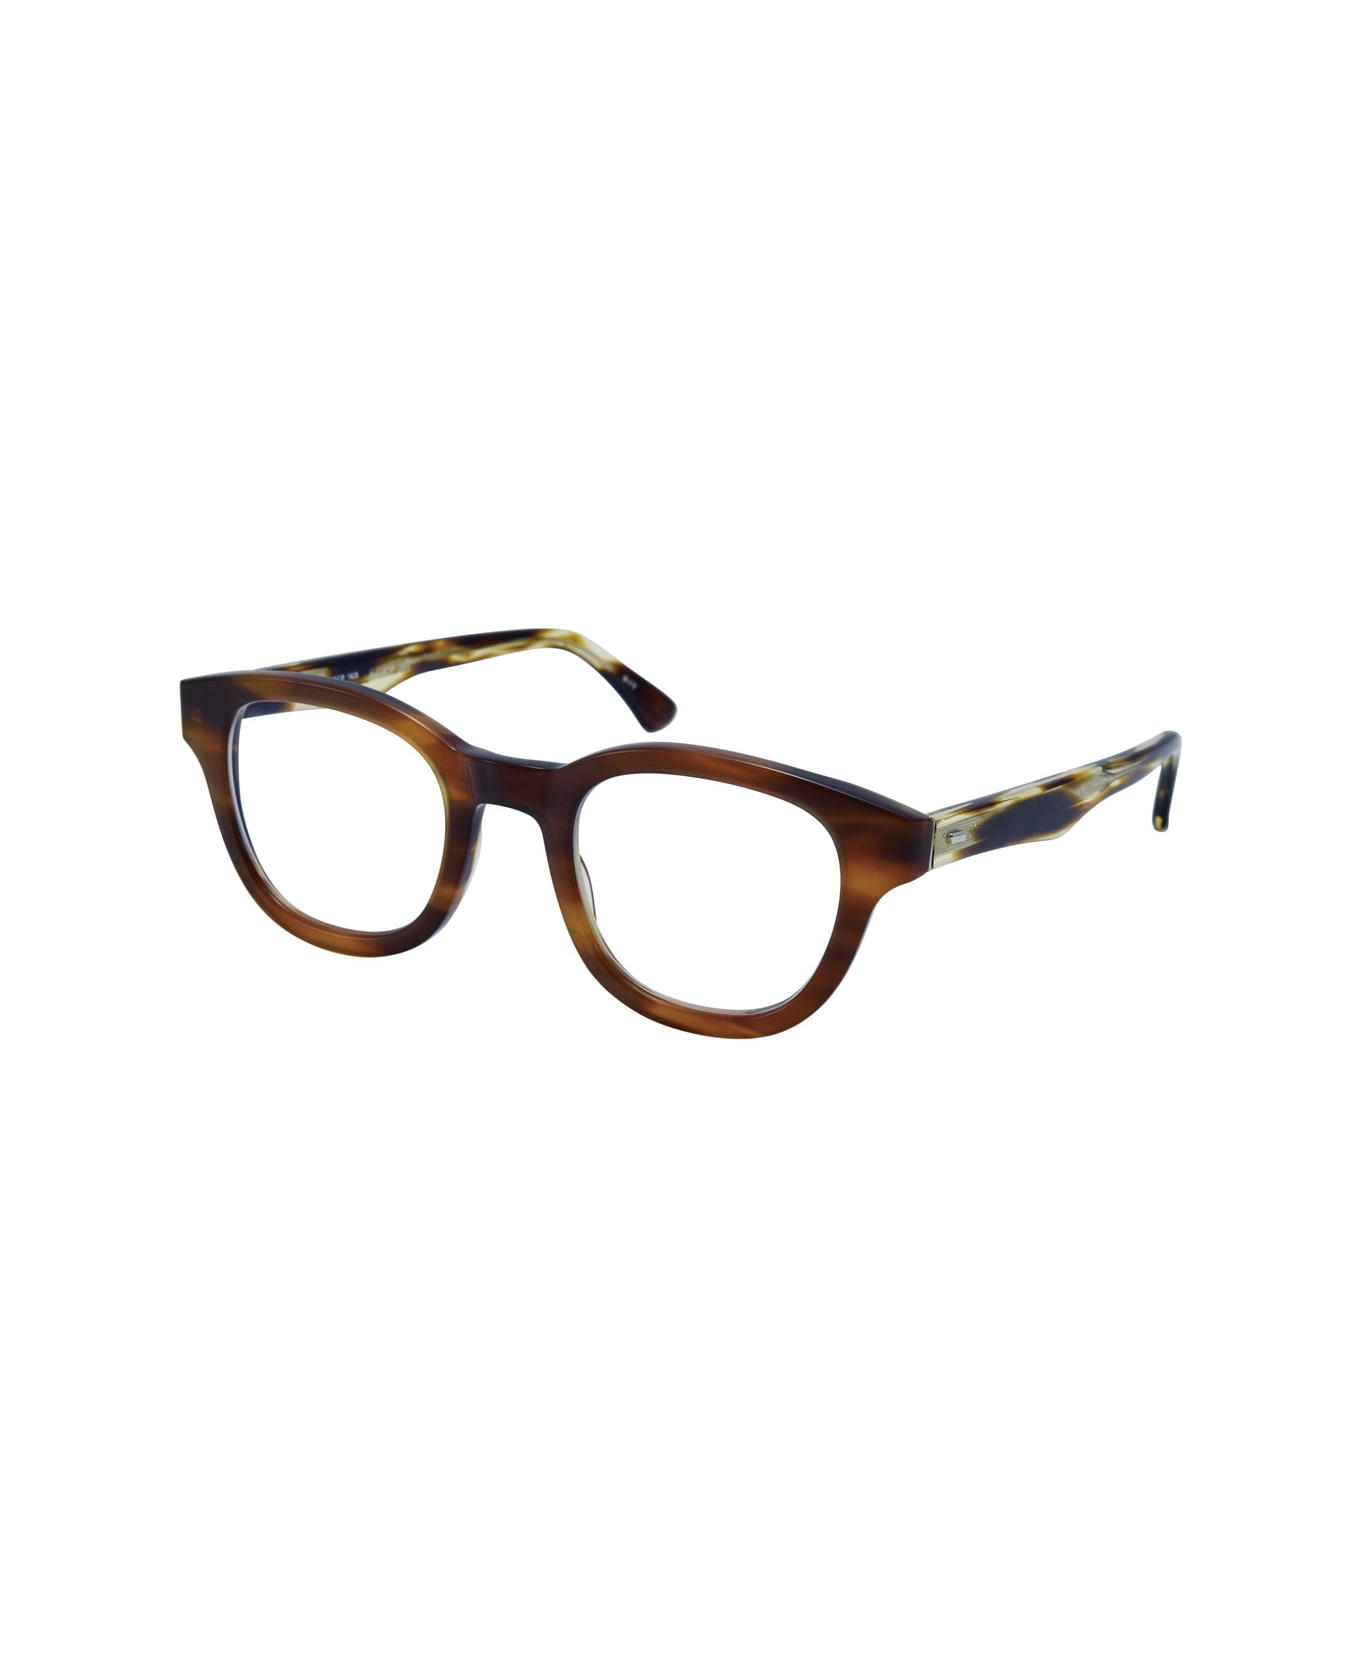 Masunaga 11dg4bl0a Glasses - Marrone